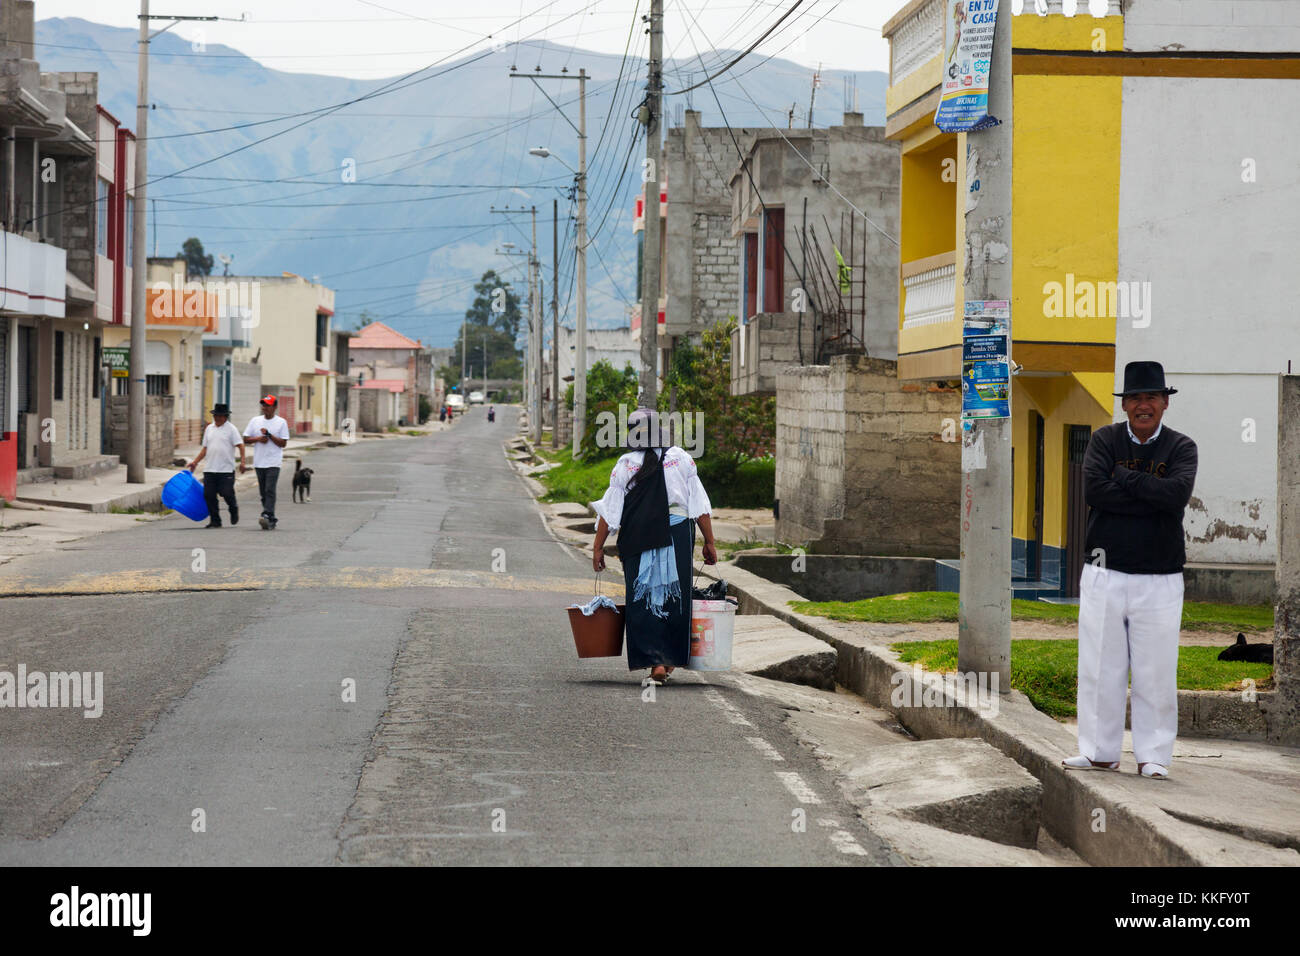 Straßenszene im Dorf Ecuador in der Nähe von Otavalo, Nord-Ecuador, Südamerika Stockfoto